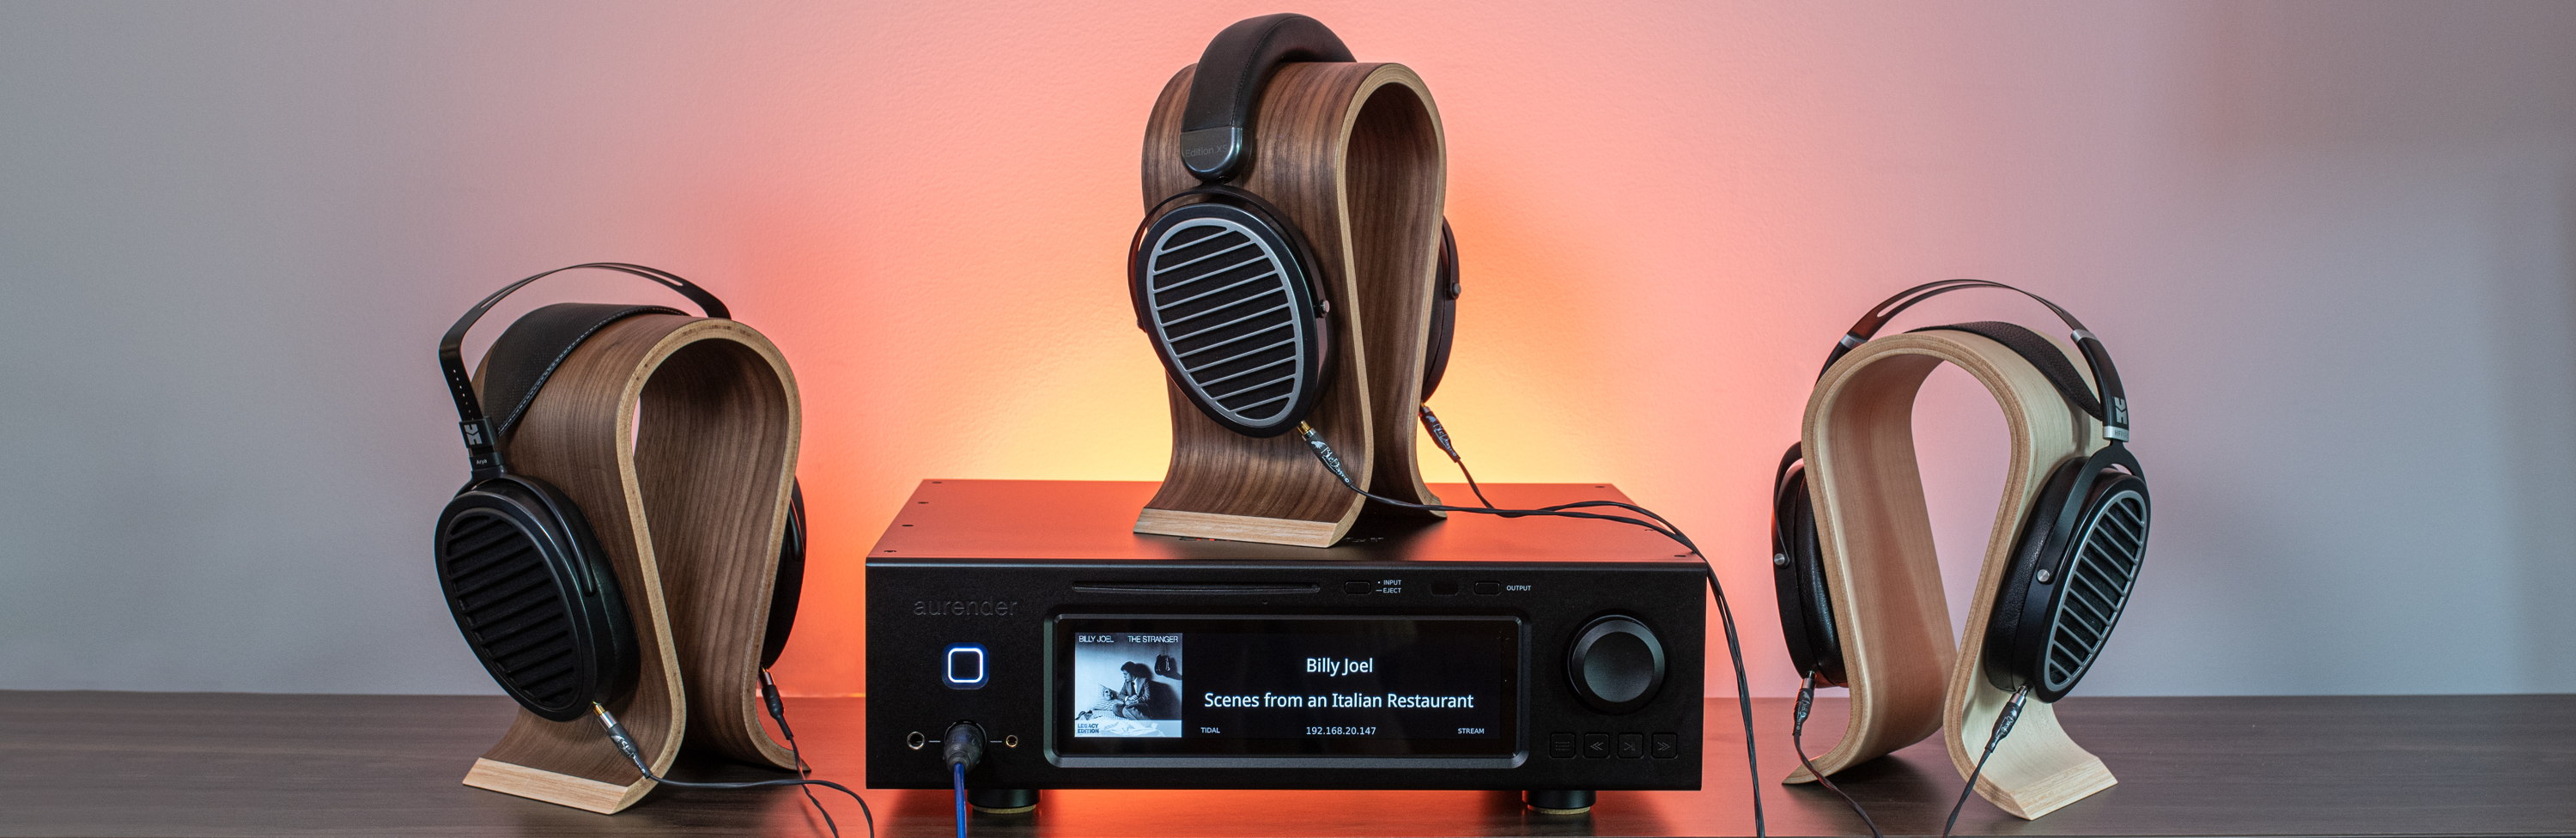 HiFiMan Edition XS Headphone Review - Moon Audio